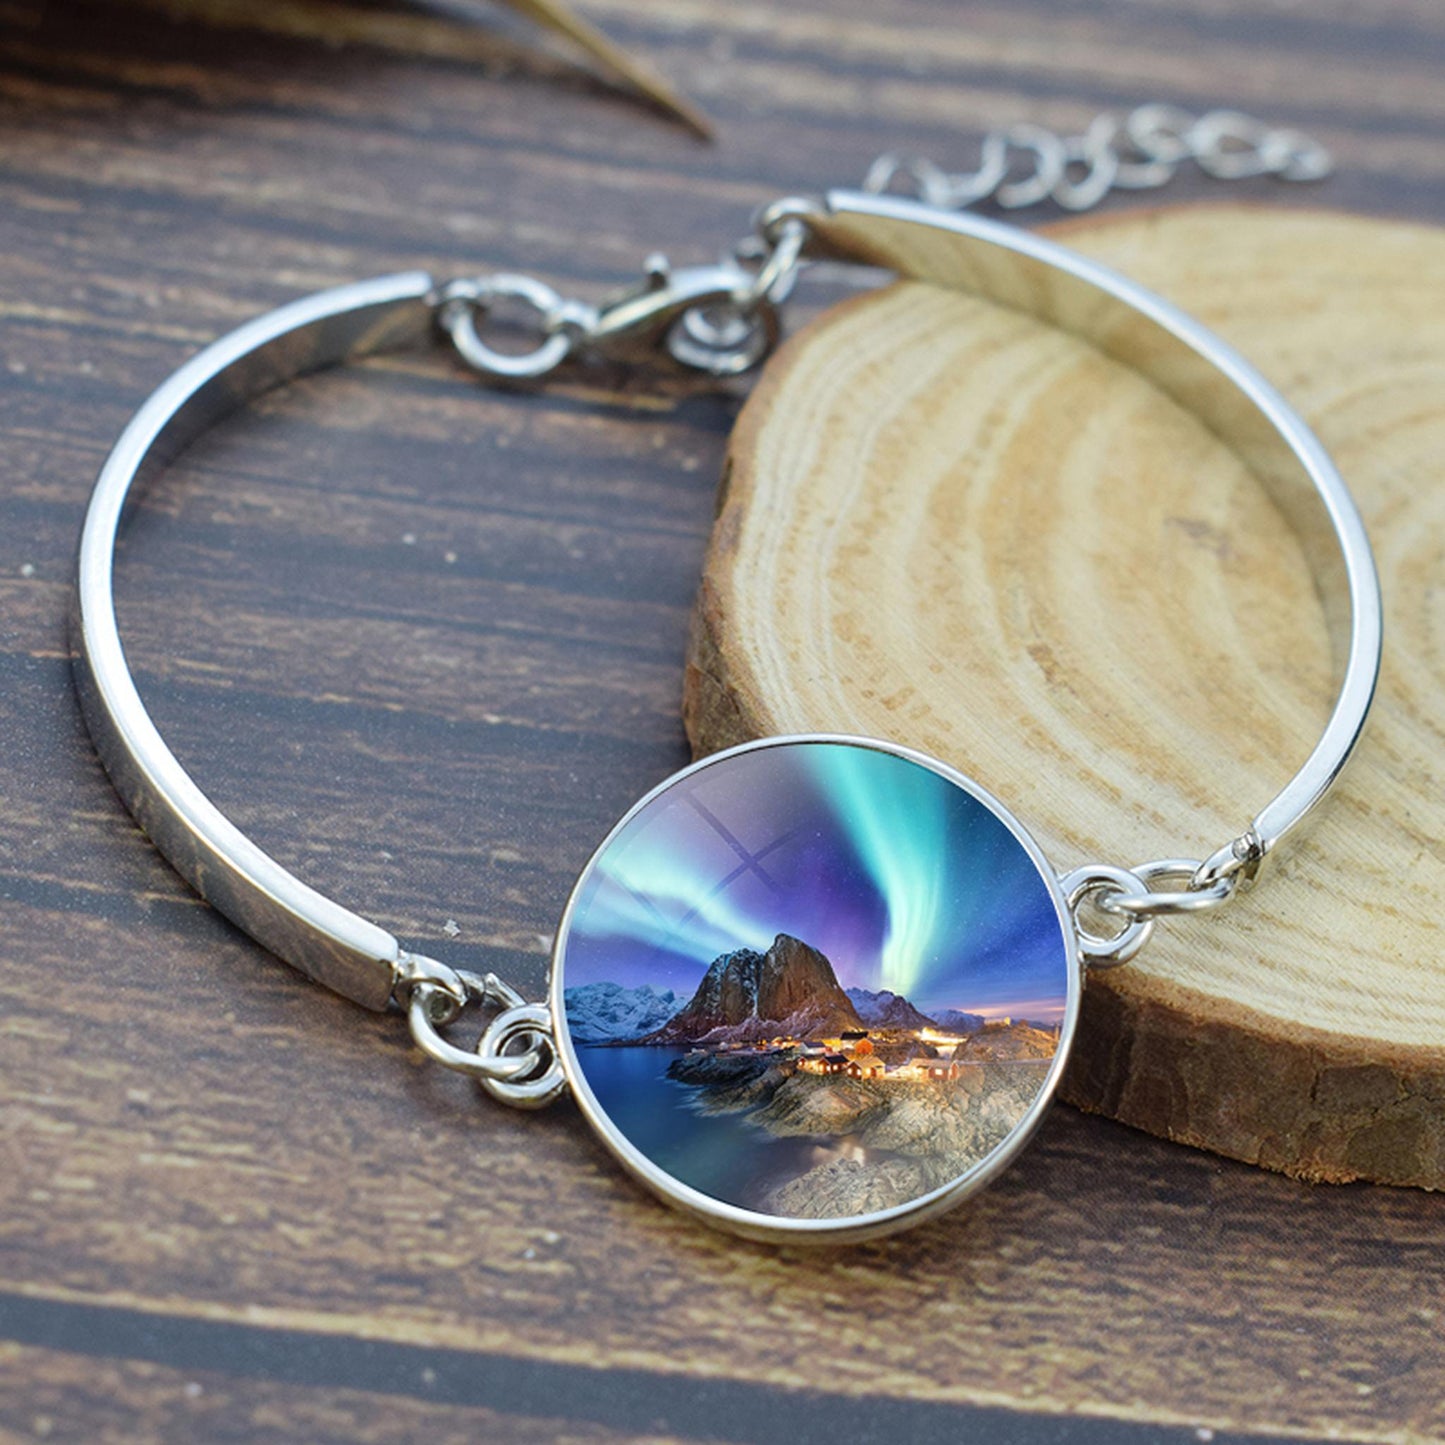 Unique Aurora Borealis Bangle Bracelet - Northern Light Jewelry - Glass Cabochon Silver Plated Bracelet - Perfect Aurora Lovers Gift 12